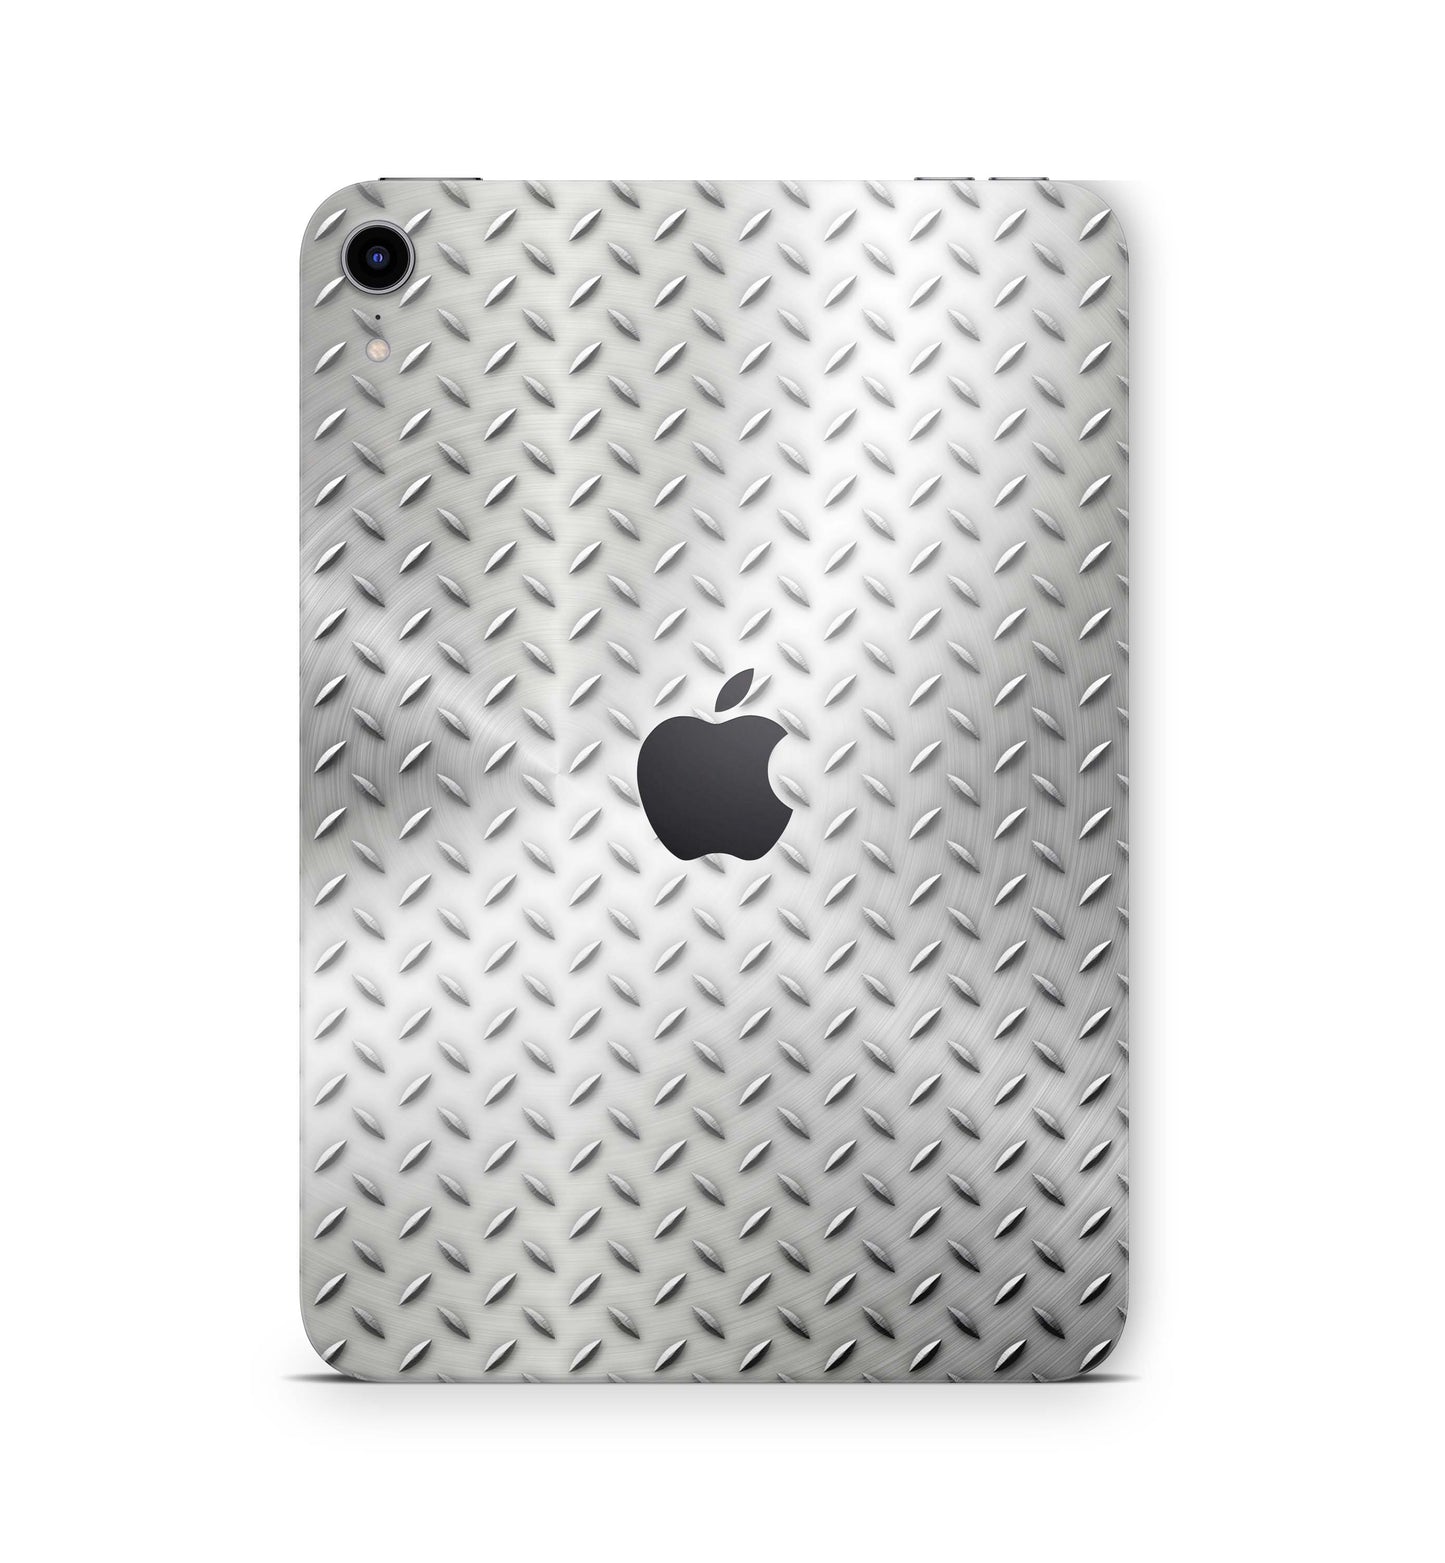 Apple iPad Skin Design Cover Folie Vinyl Skins & Wraps für alle iPad Modelle Aufkleber Skins4u Stahl  